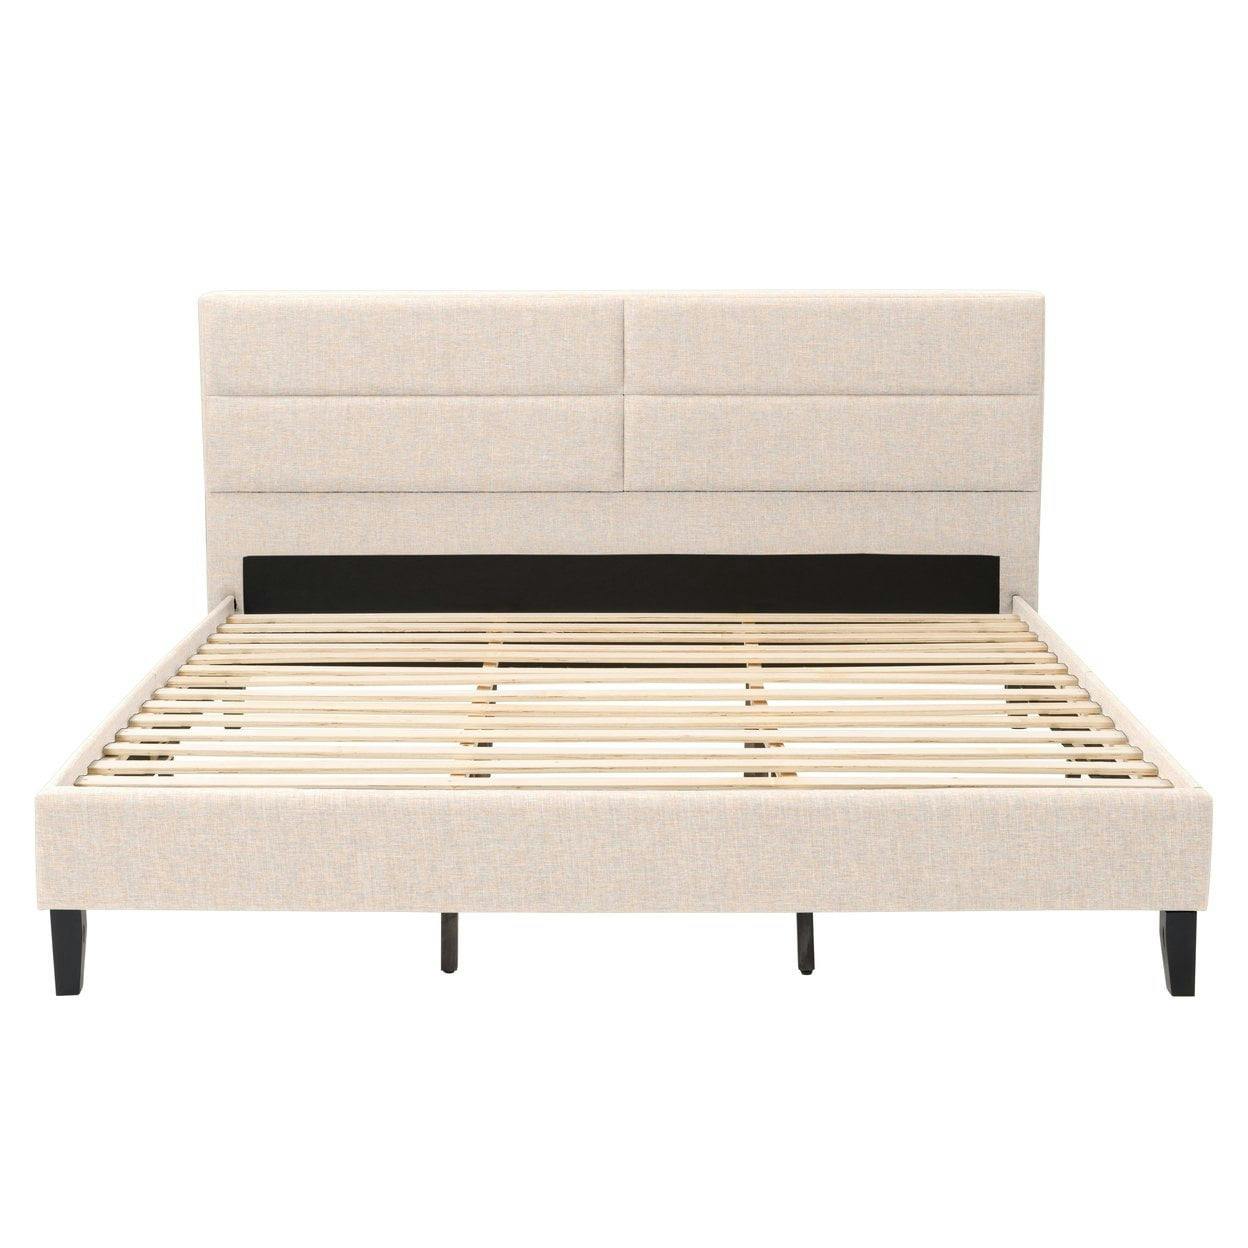 Bellevue Cream King Platform Bed with Tufted Upholstered Headboard